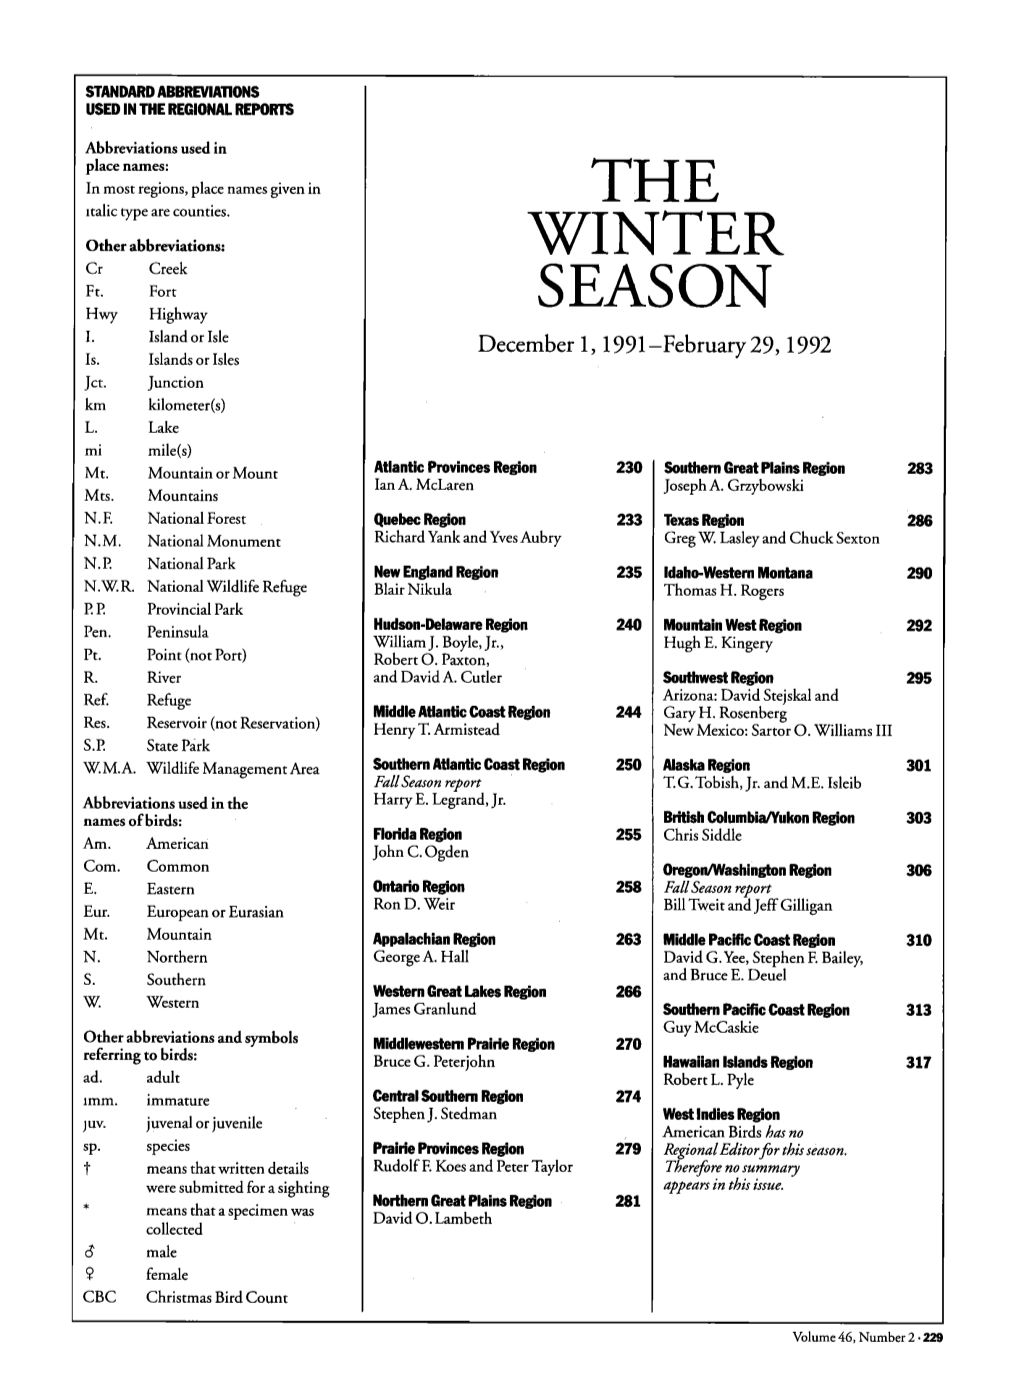 The Winter Season December 1, 1991-February 29, 1992